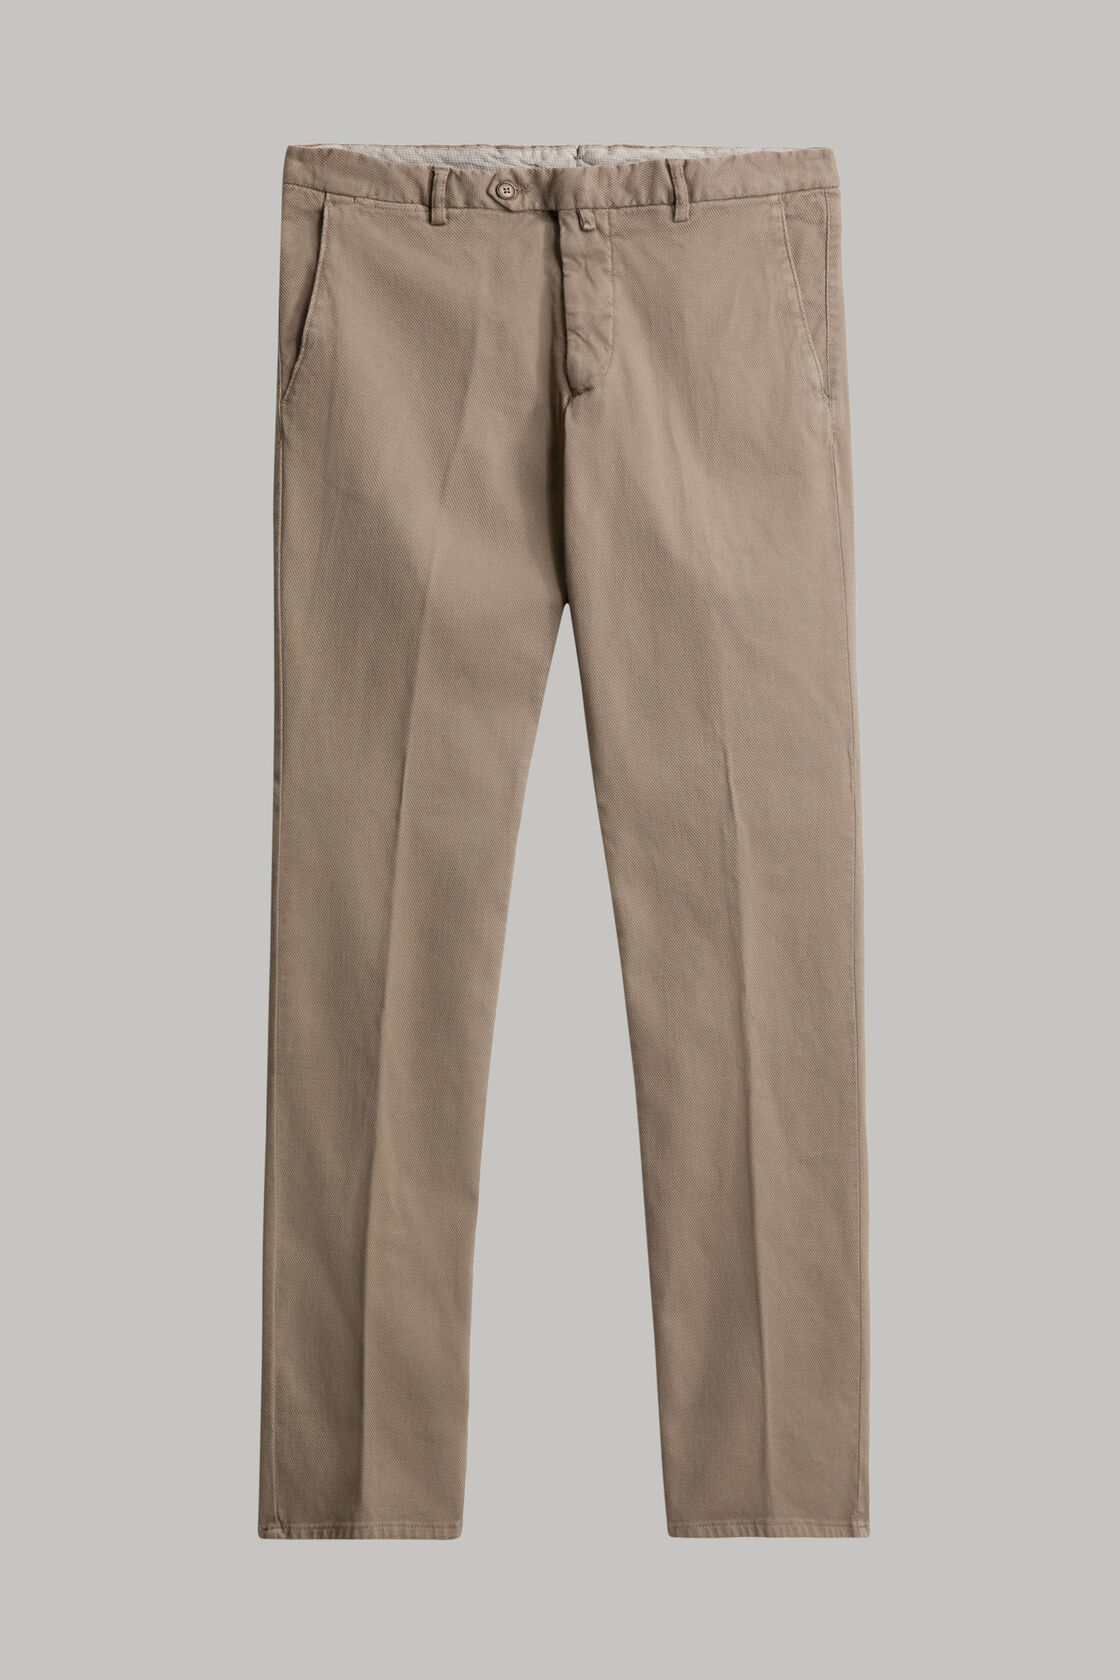 Pantaloni in cotone tencel elasticizzato slim fit, , hi-res